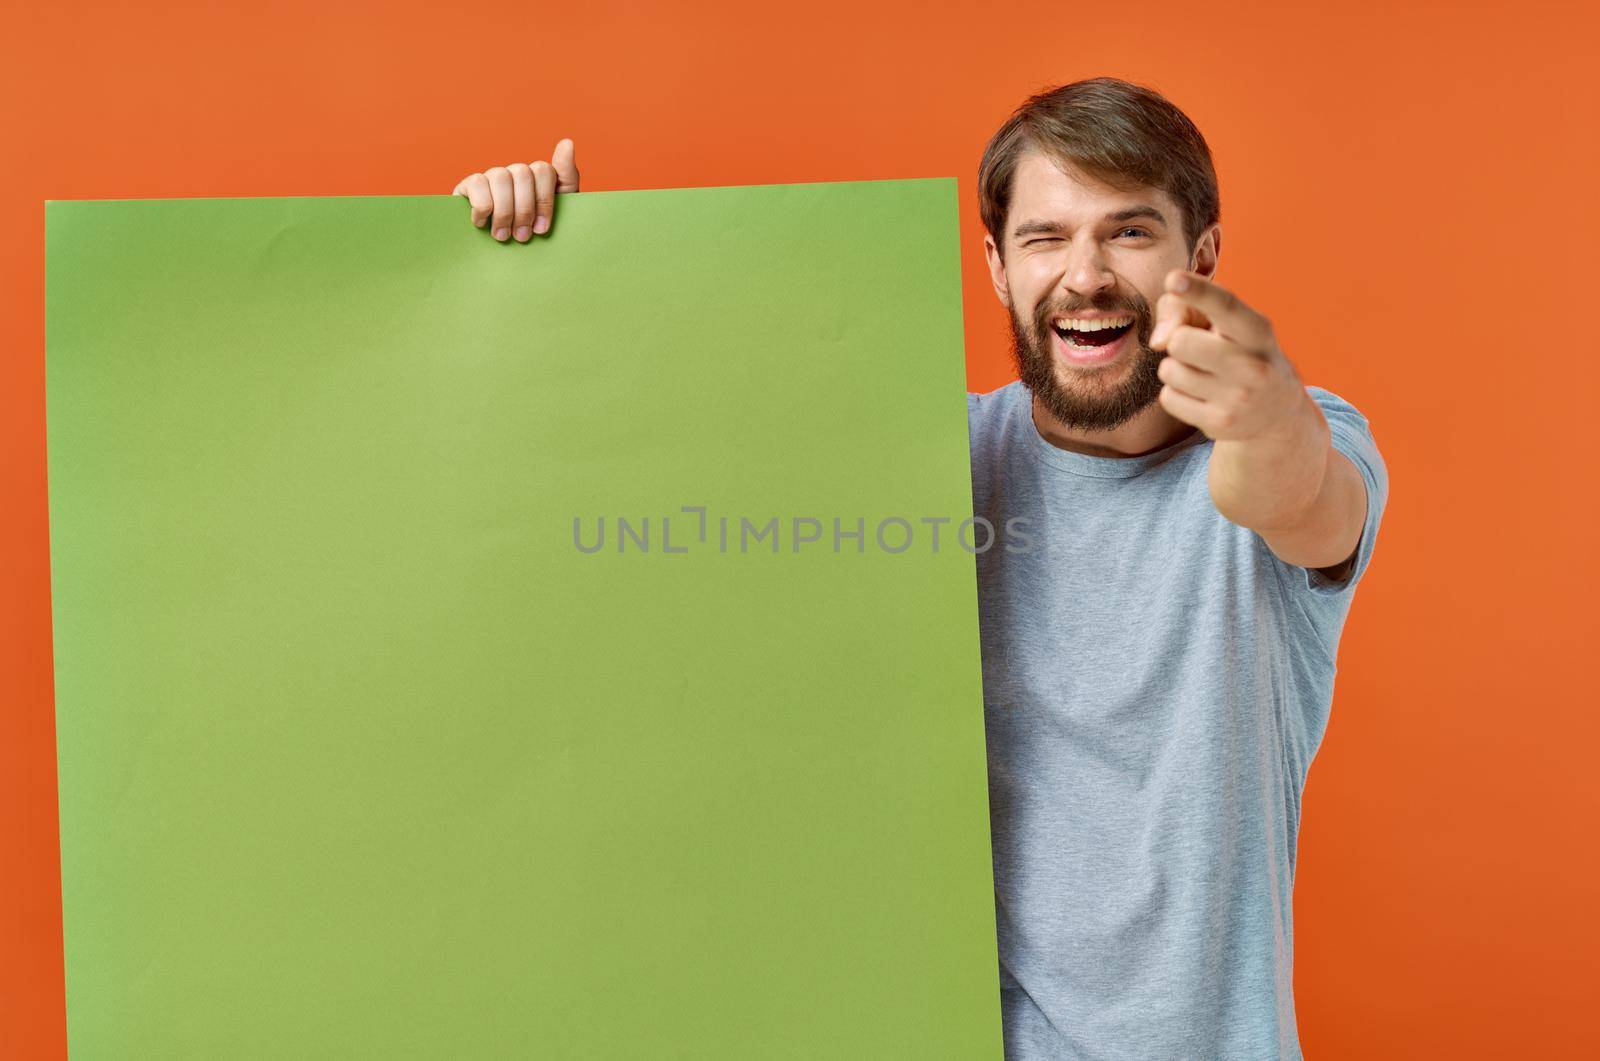 emotional man t shirts green mockup poster presentation marketing. High quality photo